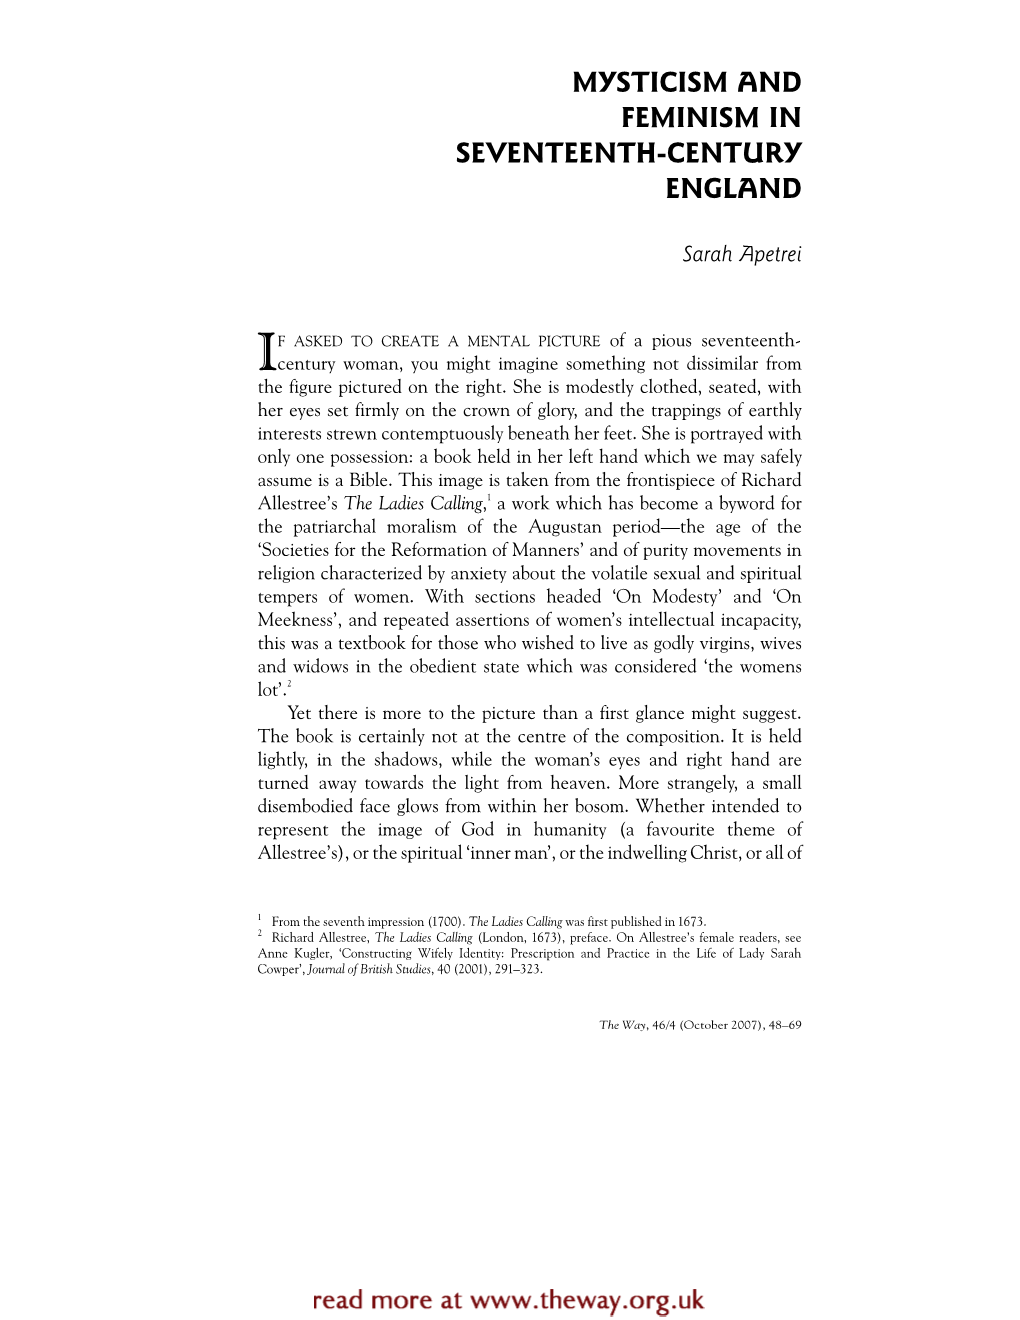 Mysticism and Feminism in Seventeenth-Century England